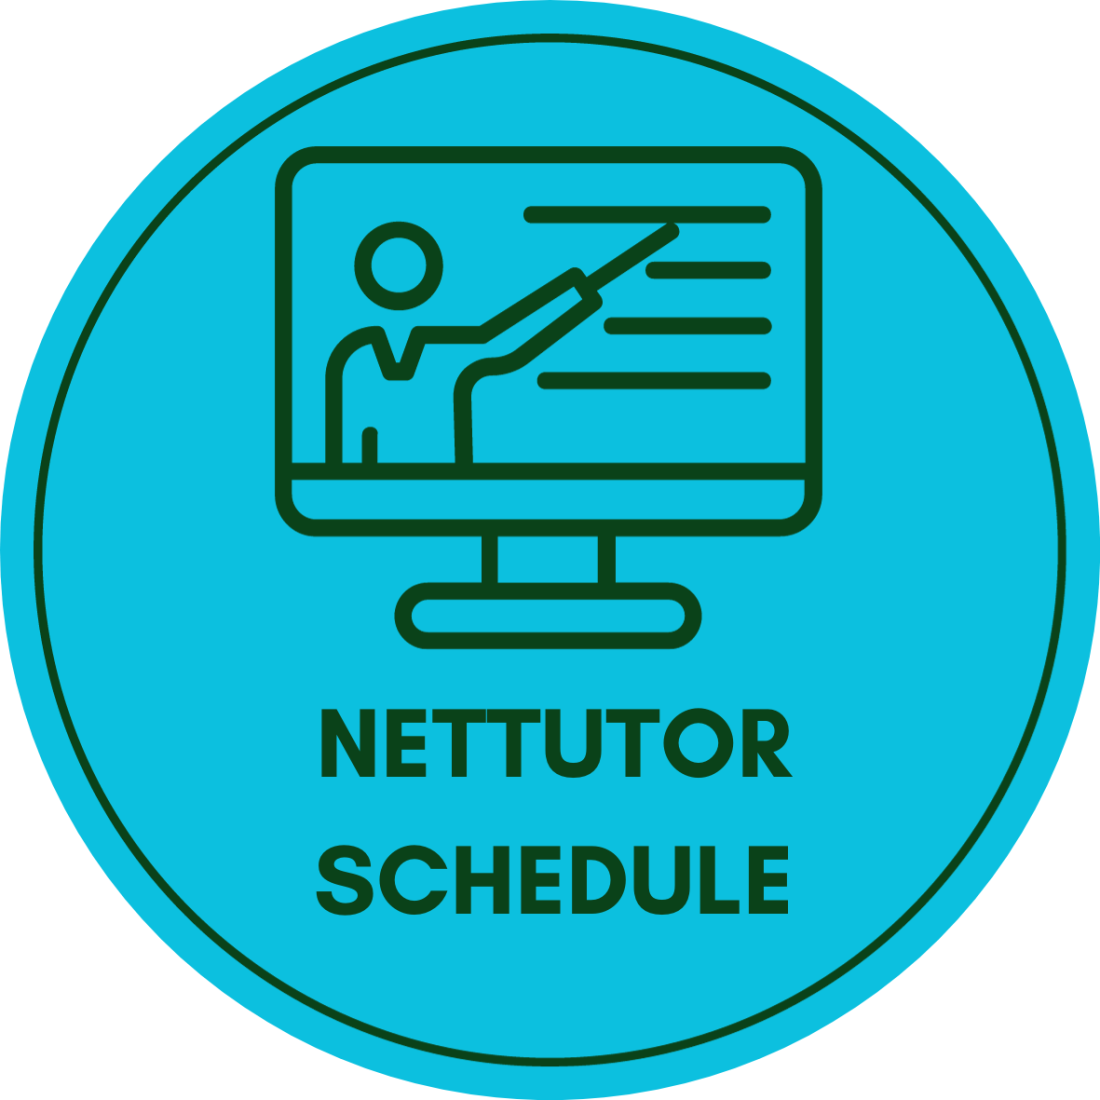 NetTutor Schedule